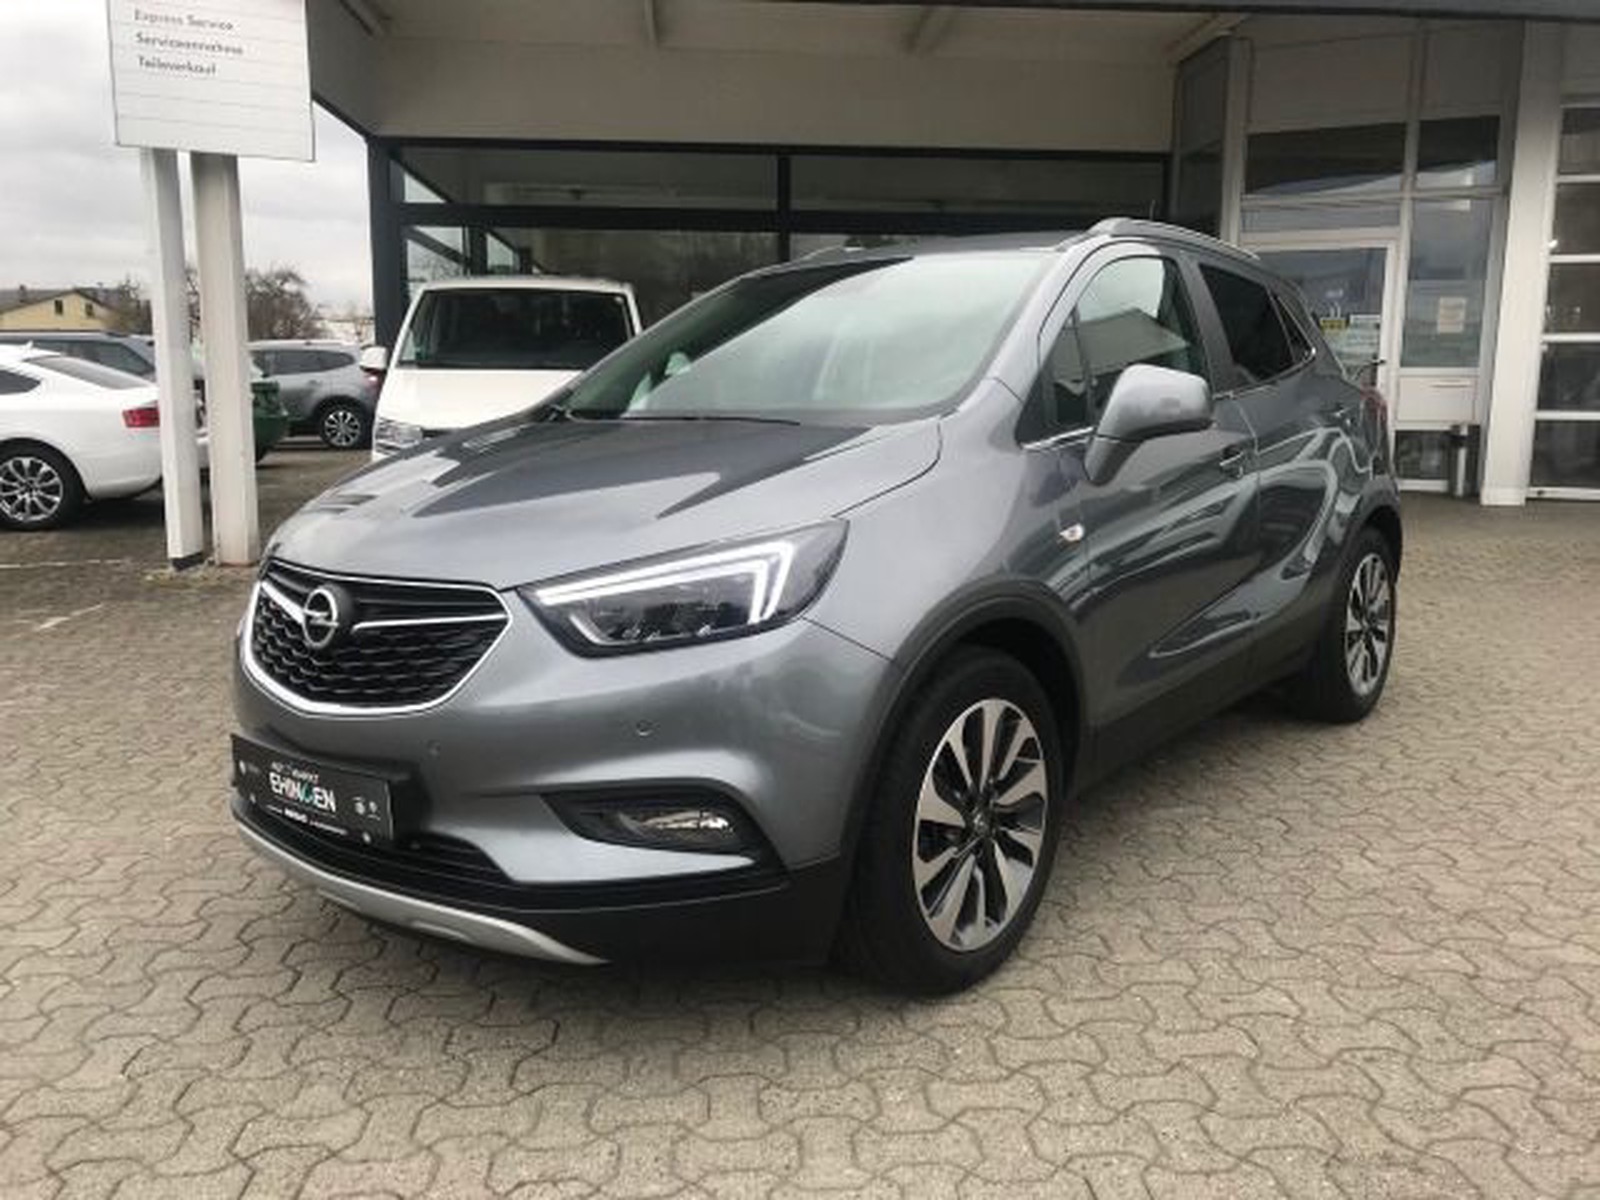 Opel Mokka X ON 1.4 Turbo gebraucht kaufen in Hechingen Preis